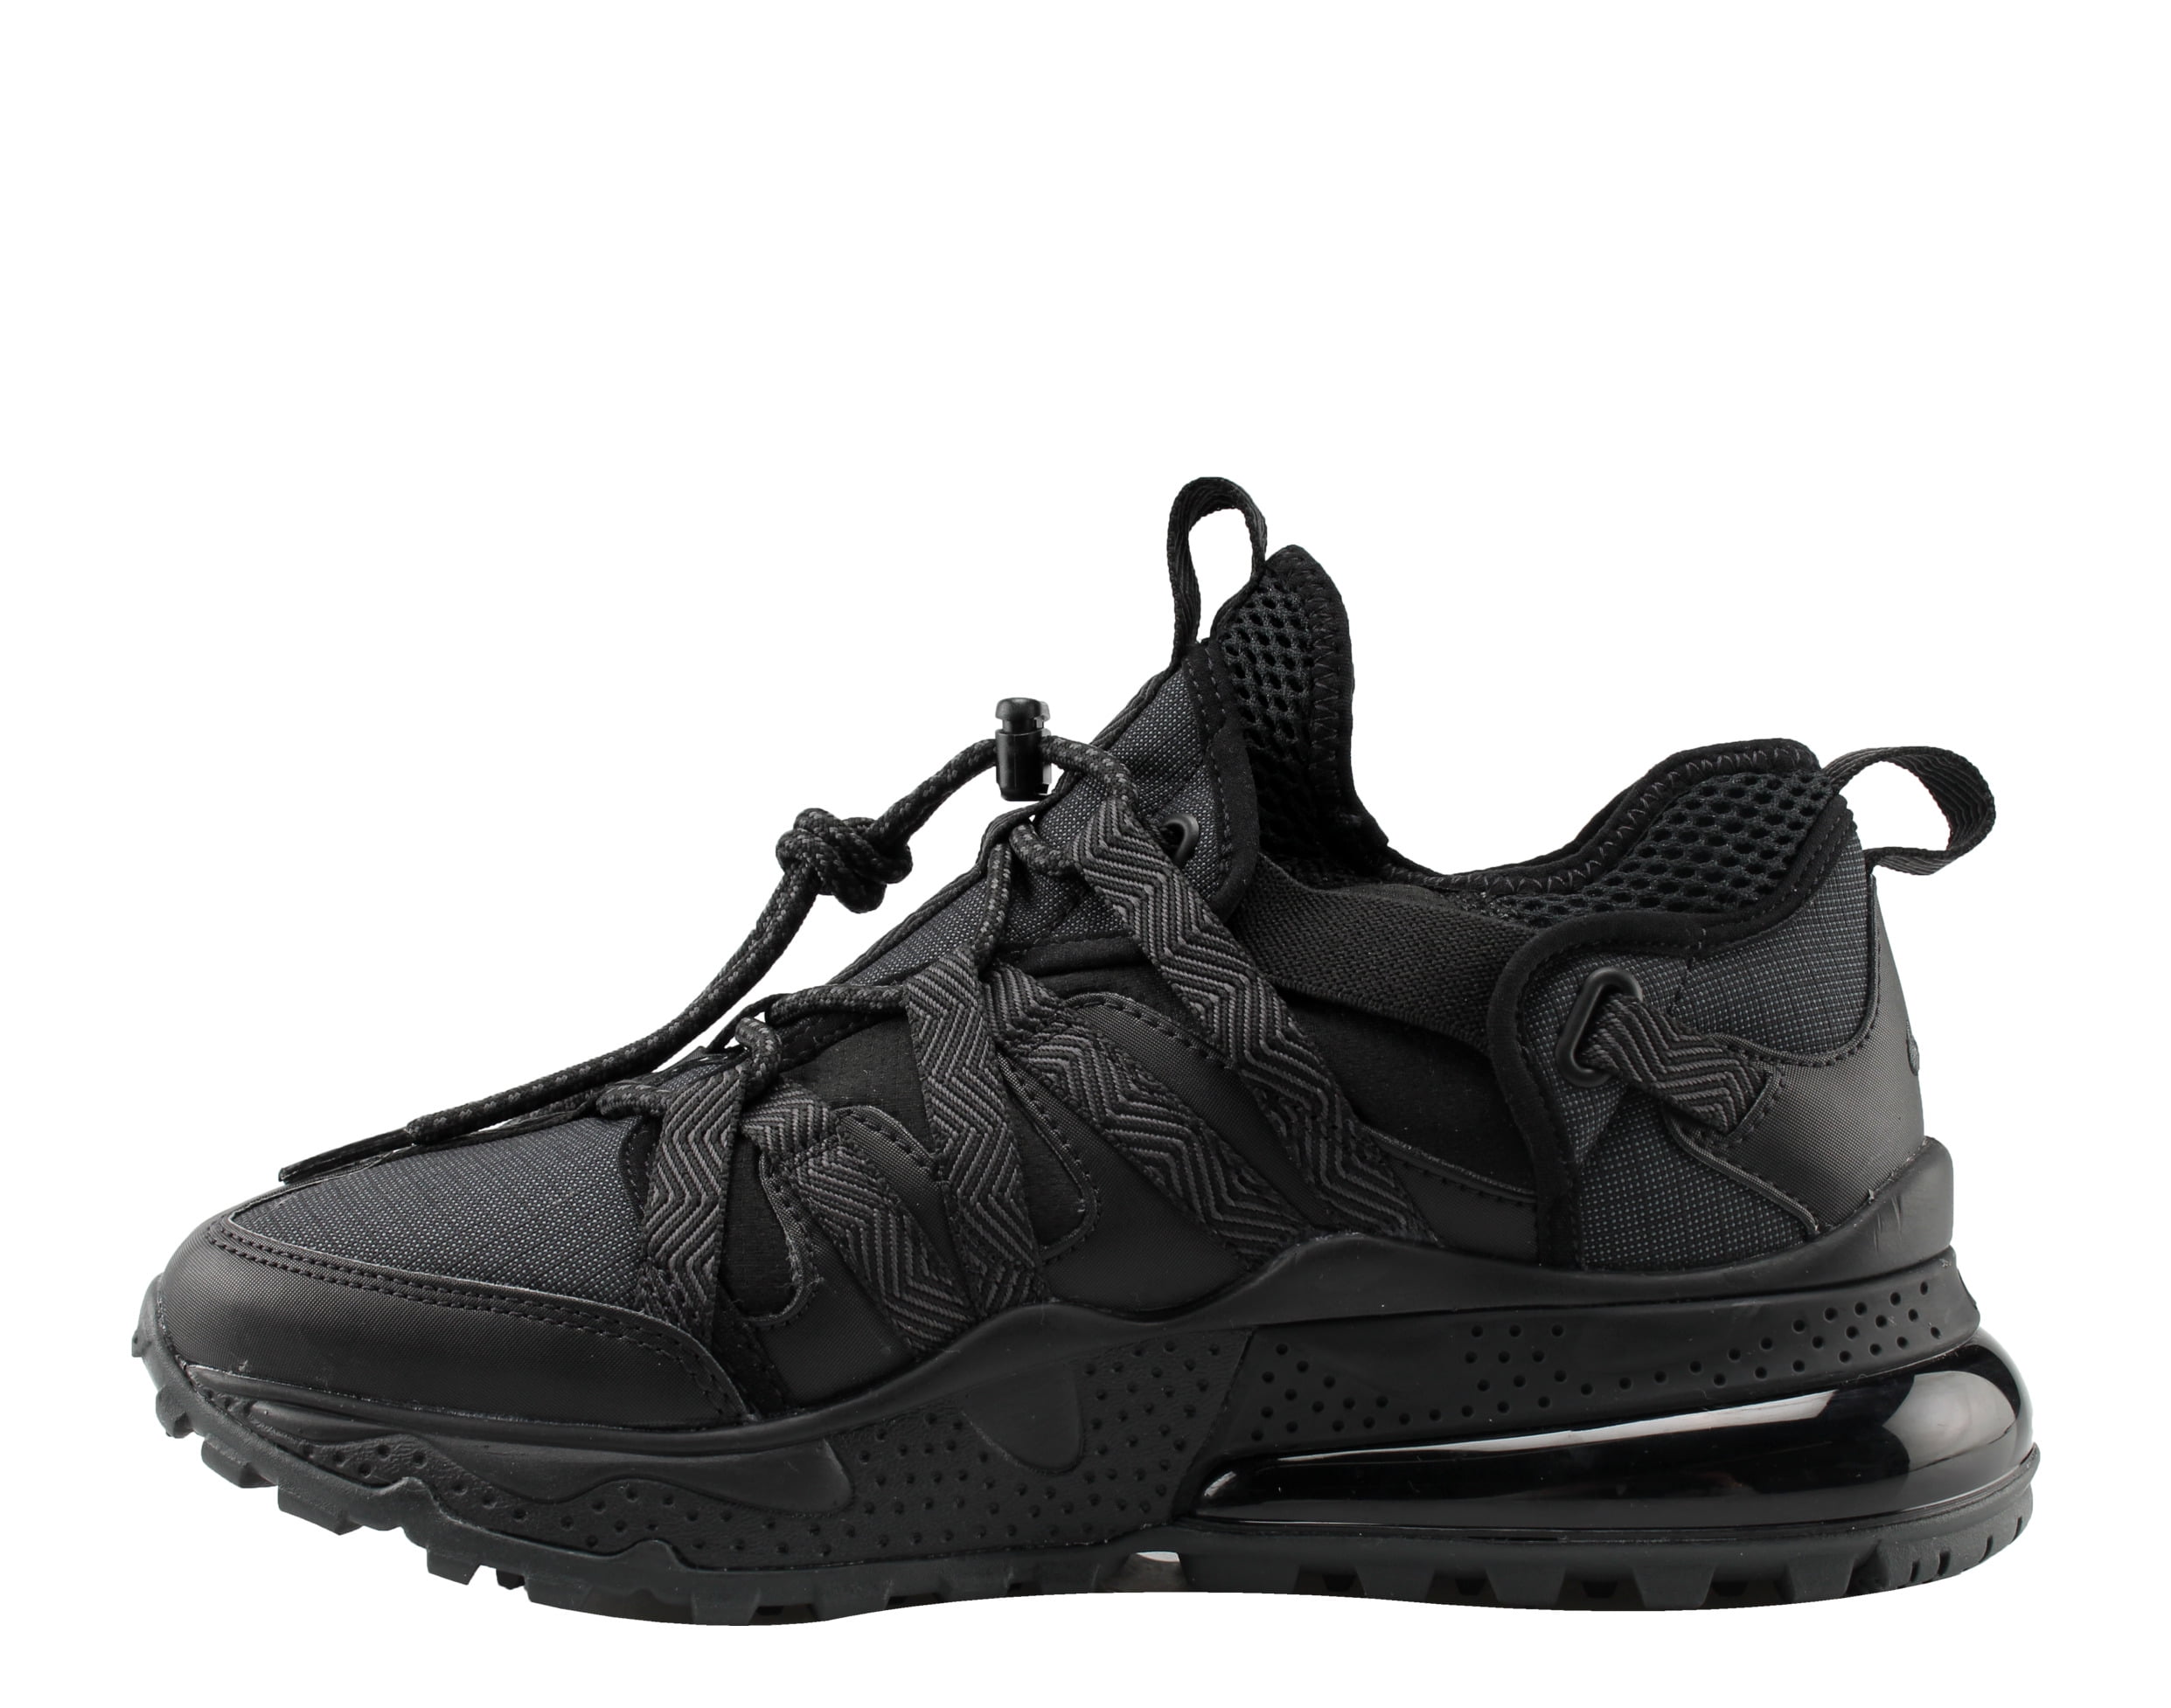 Oscurecer Ocultación de ahora en adelante Nike Air Max 270 Bowfin Black/Anthracite-Black Men's Running Shoes  AJ7200-005 - Walmart.com